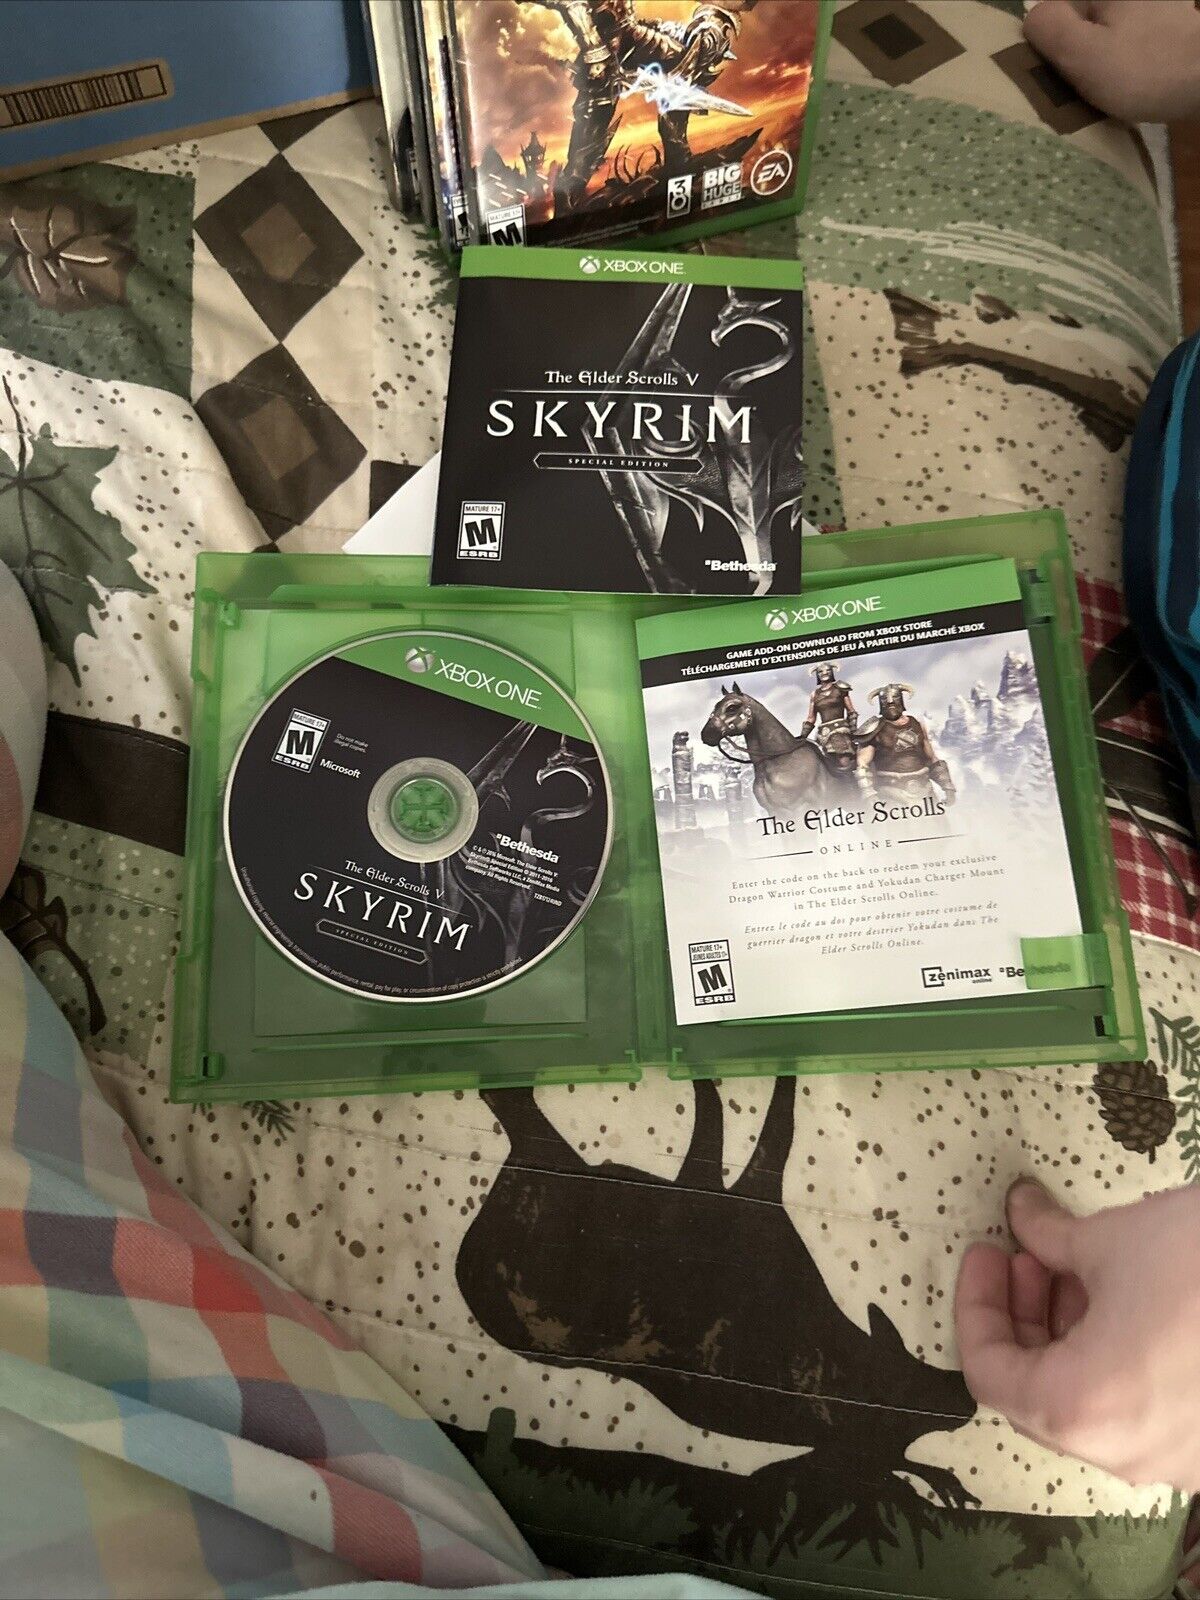 Kleuterschool maandelijks Overleving The Elder Scrolls V: Skyrim - Special Edition - Microsoft Xbox One.Map  Included. 93155171244 | eBay